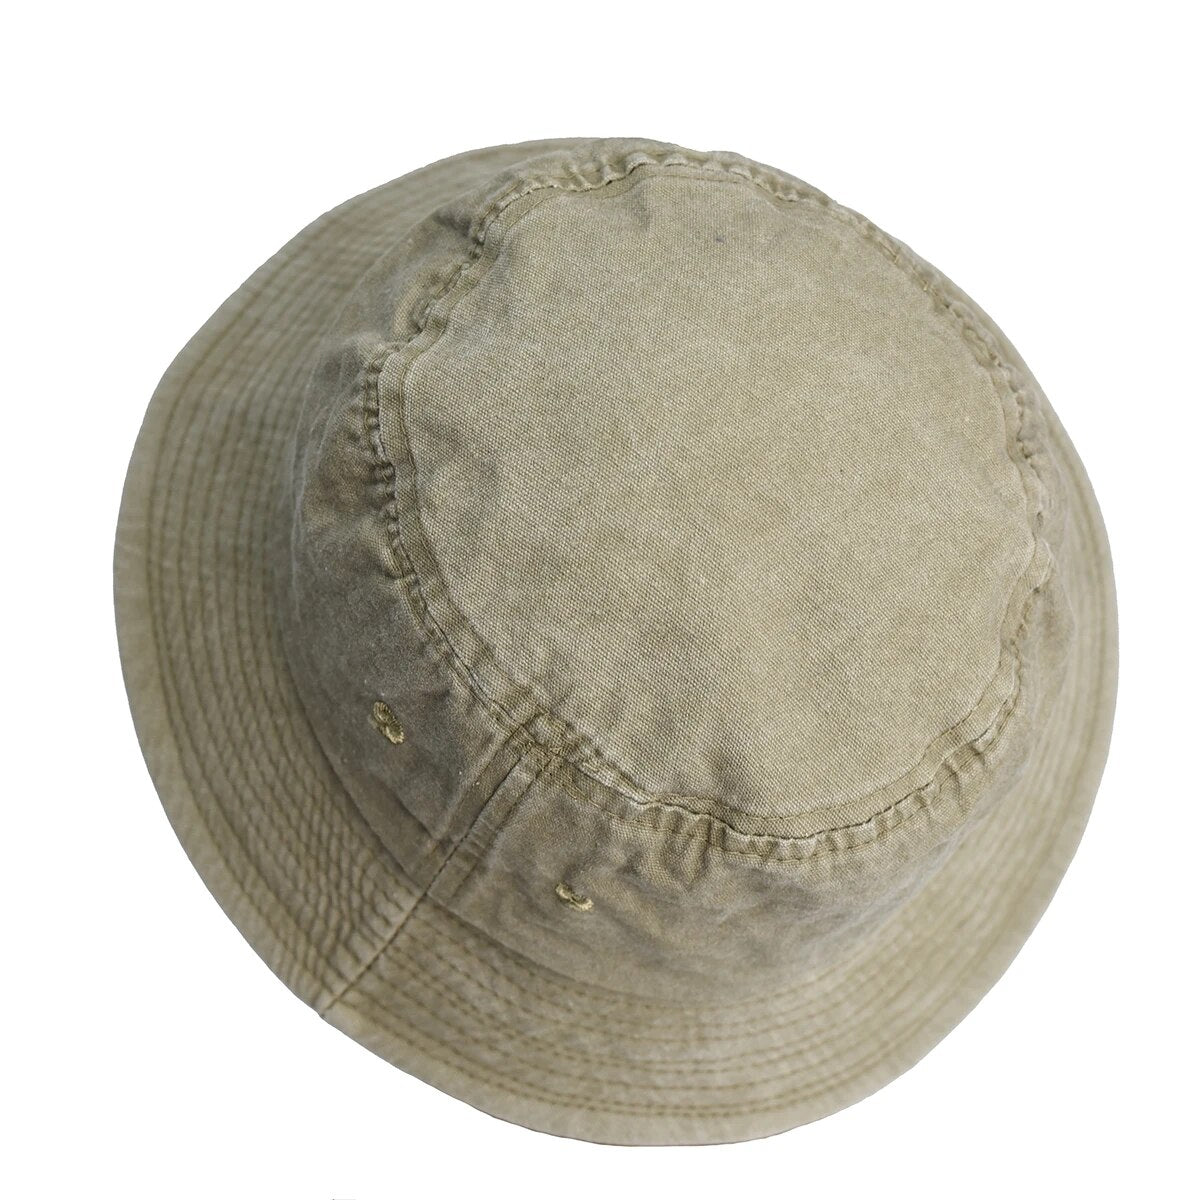 Vintage Cotton Bucket Hat